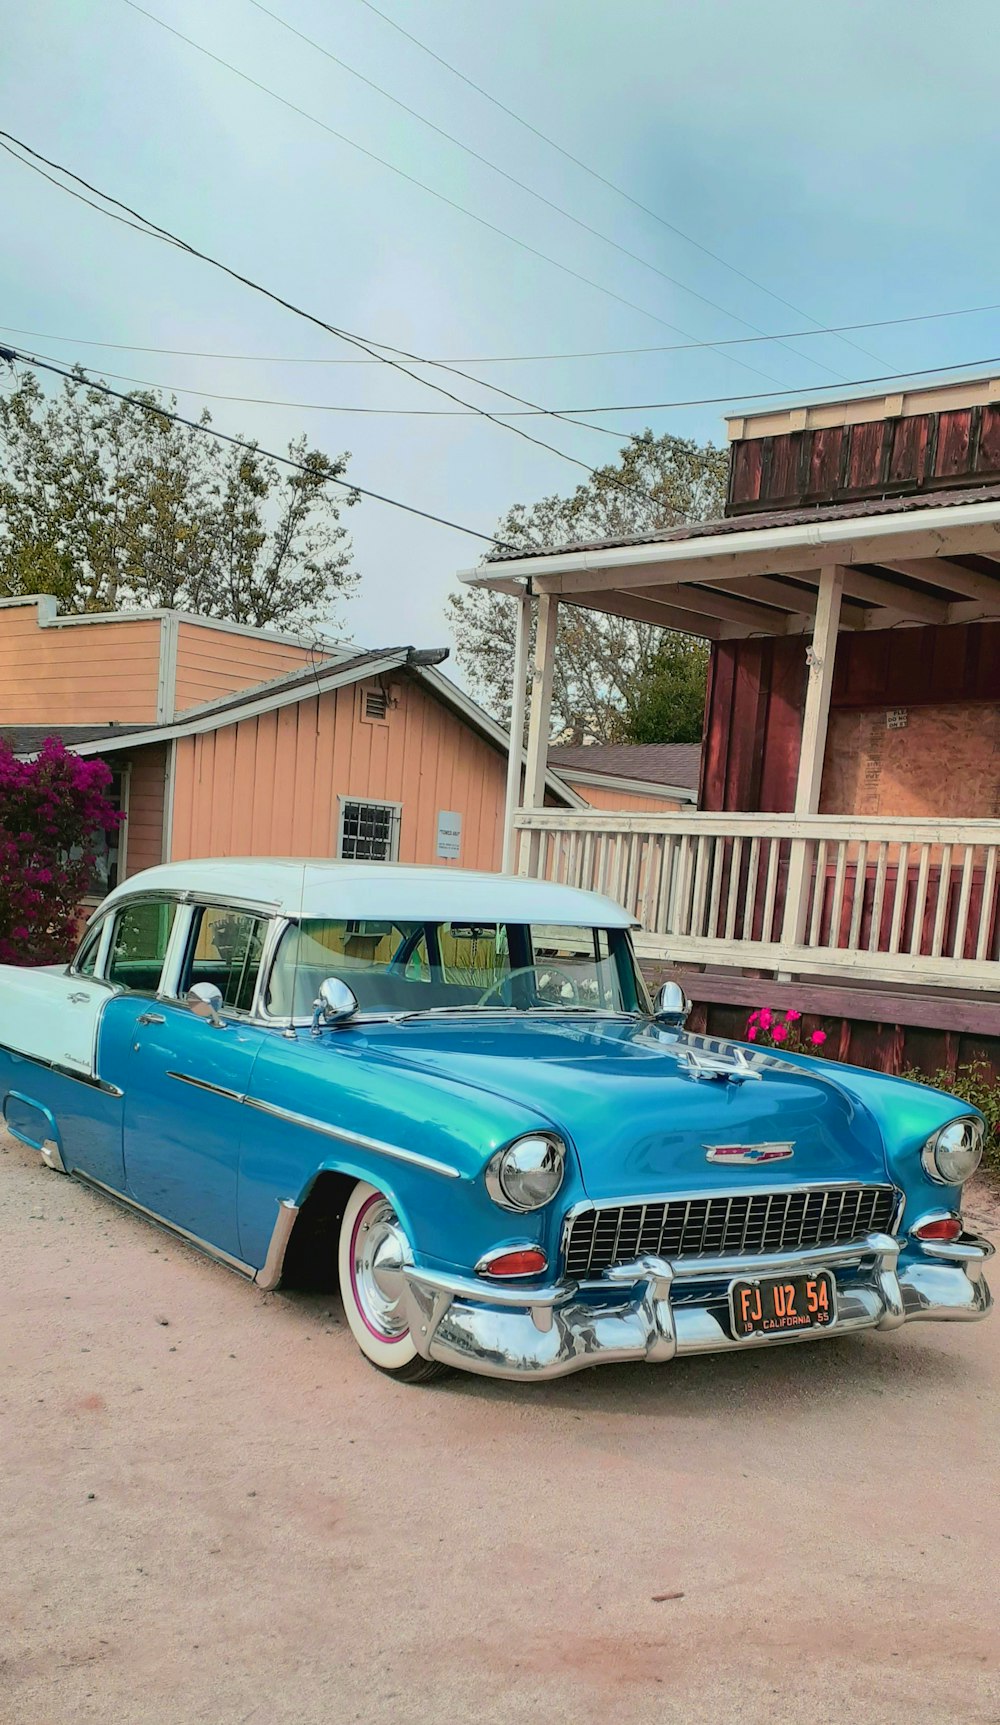 blue vintage car parked beside brown wooden house during daytime